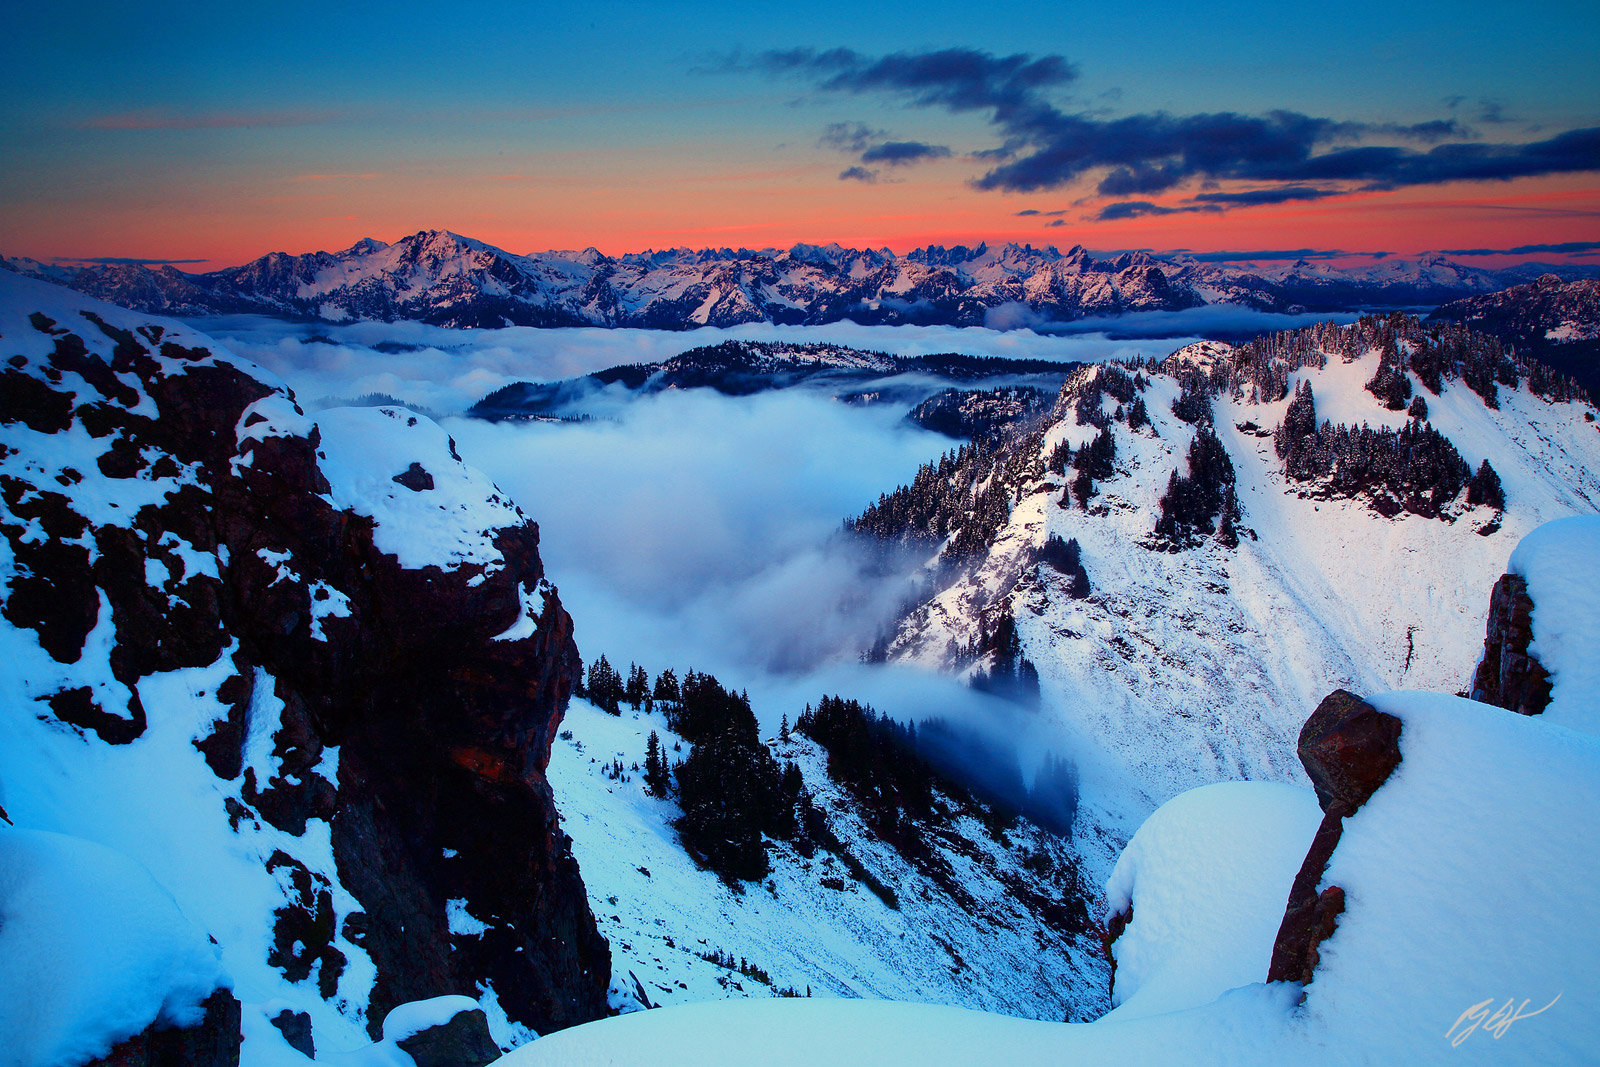 Winter Sunset Over the north Cascades from Sauk Mountain in Washington